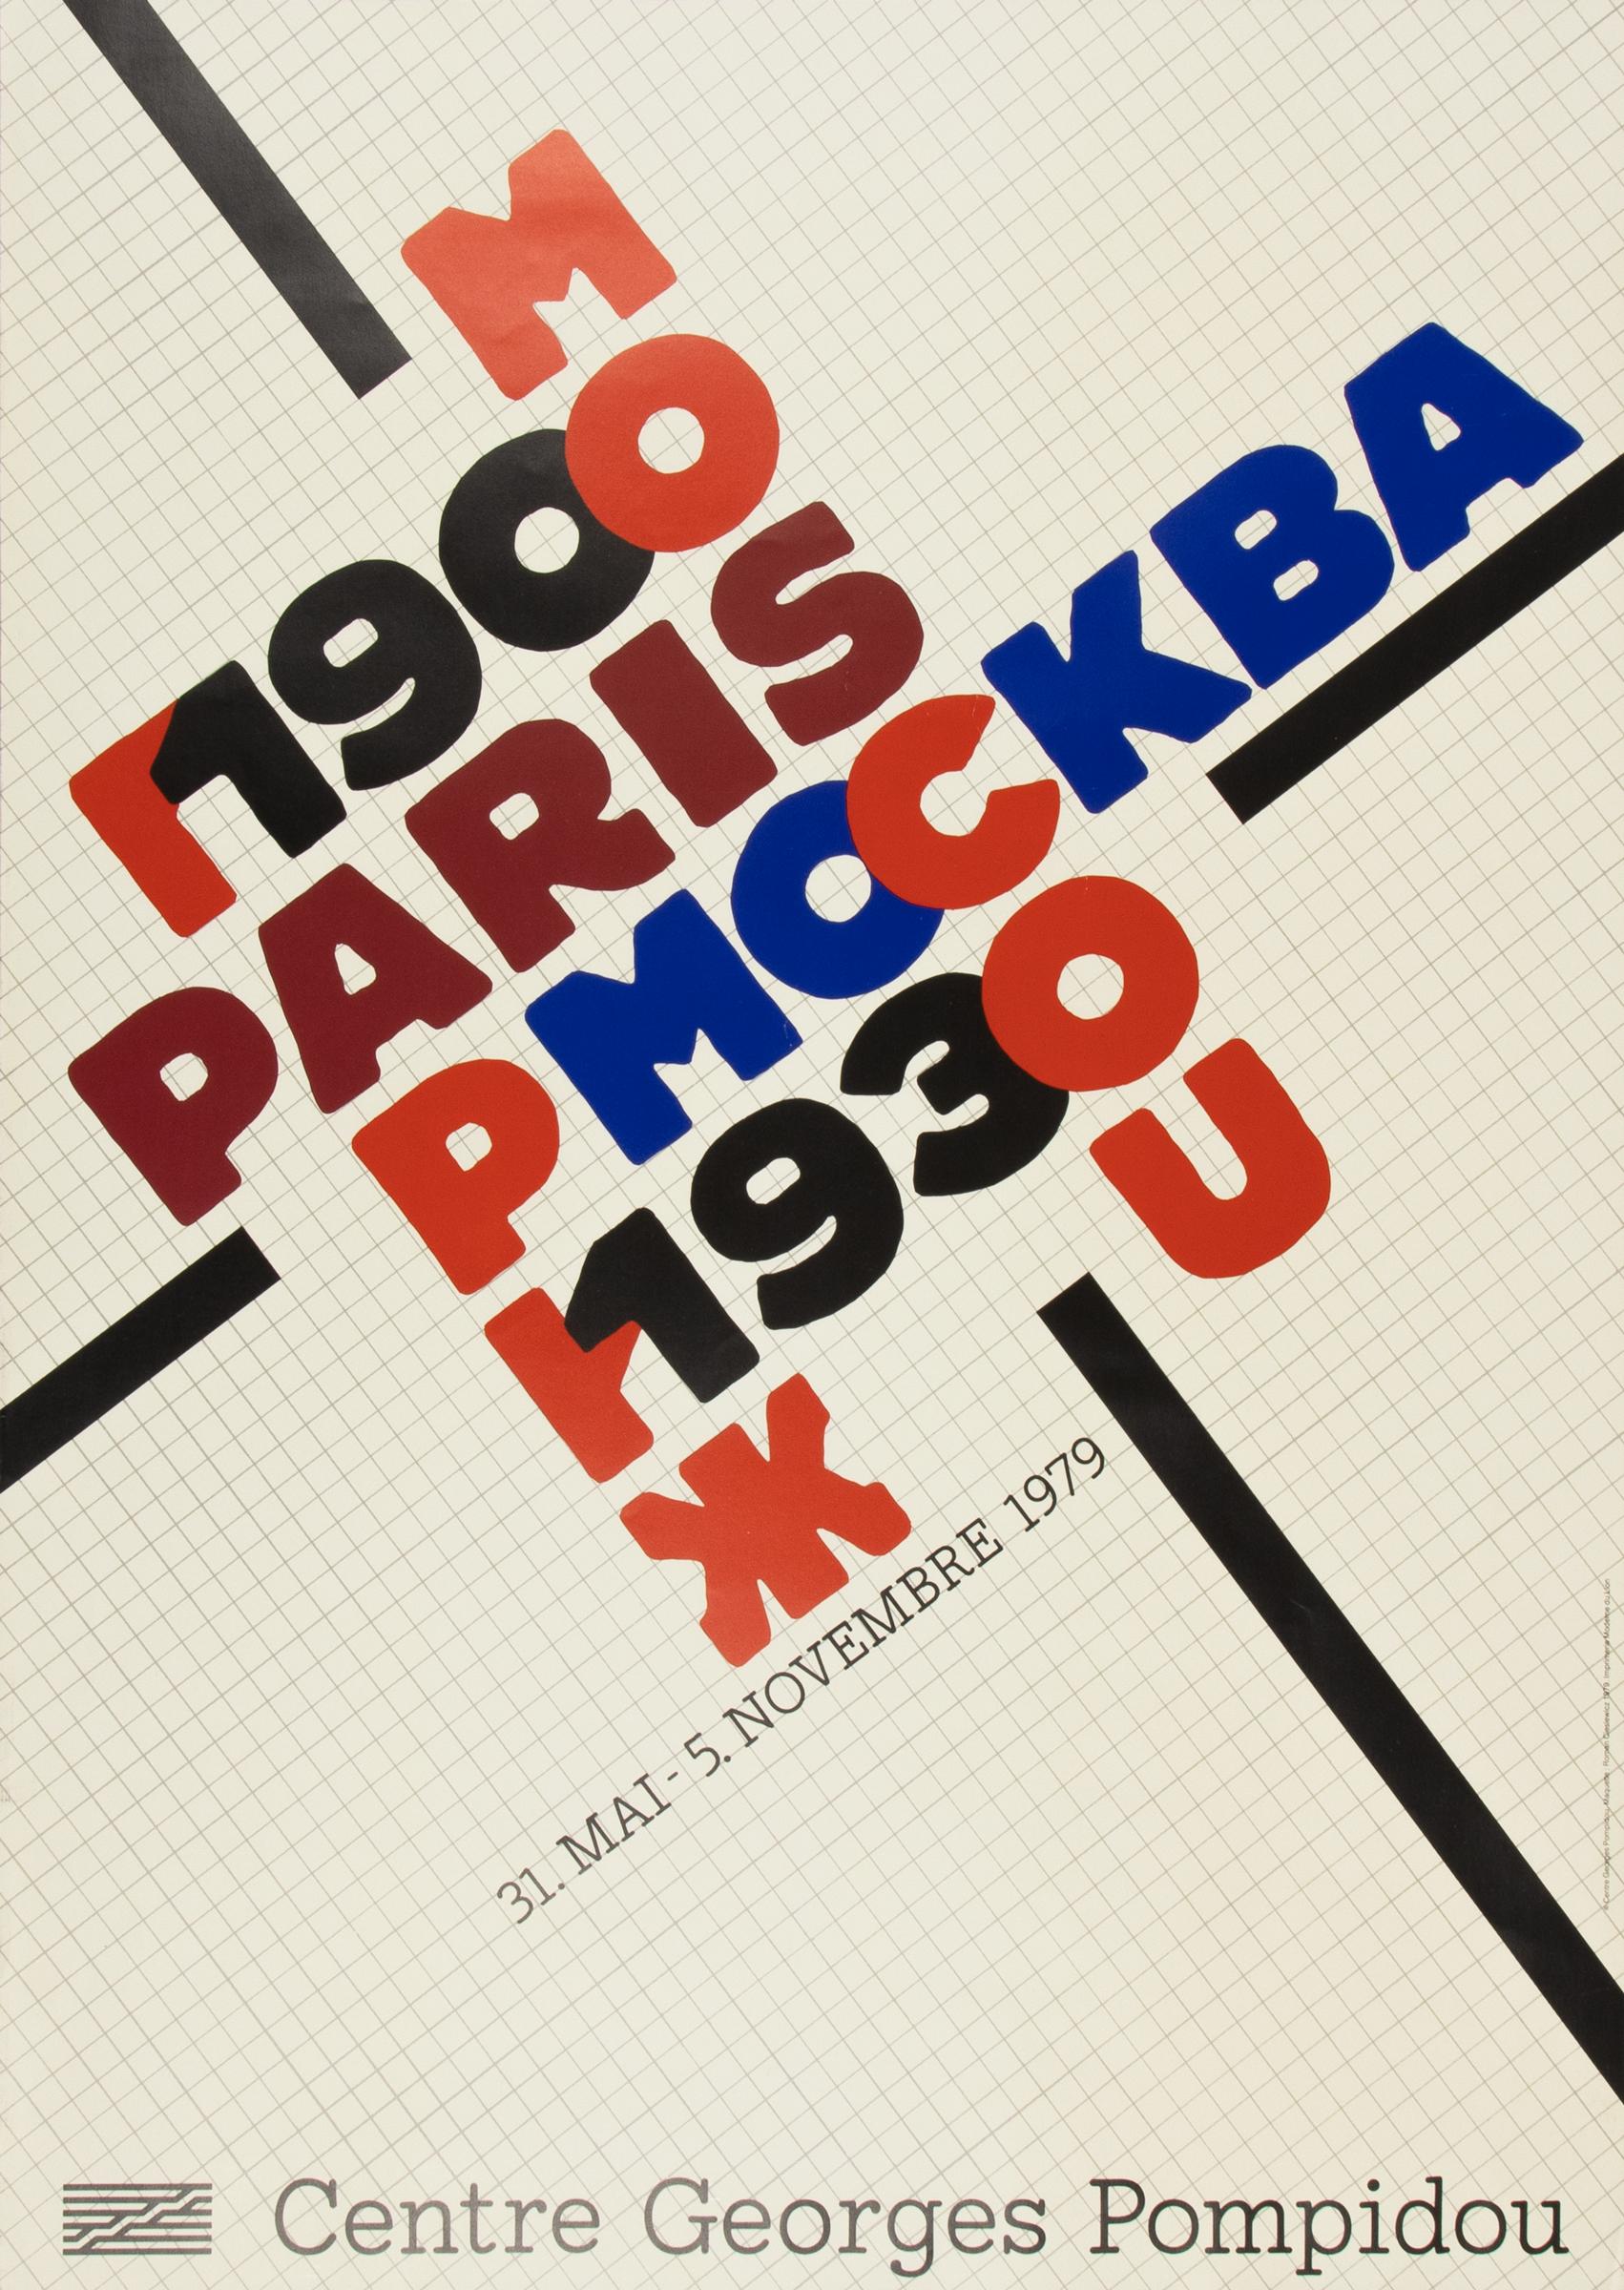 Roman Cieslewicz Abstract Print – Paris-Moscou 1900-1930, Centre Pompidou: Original-Ausstellungsplakat von 1979